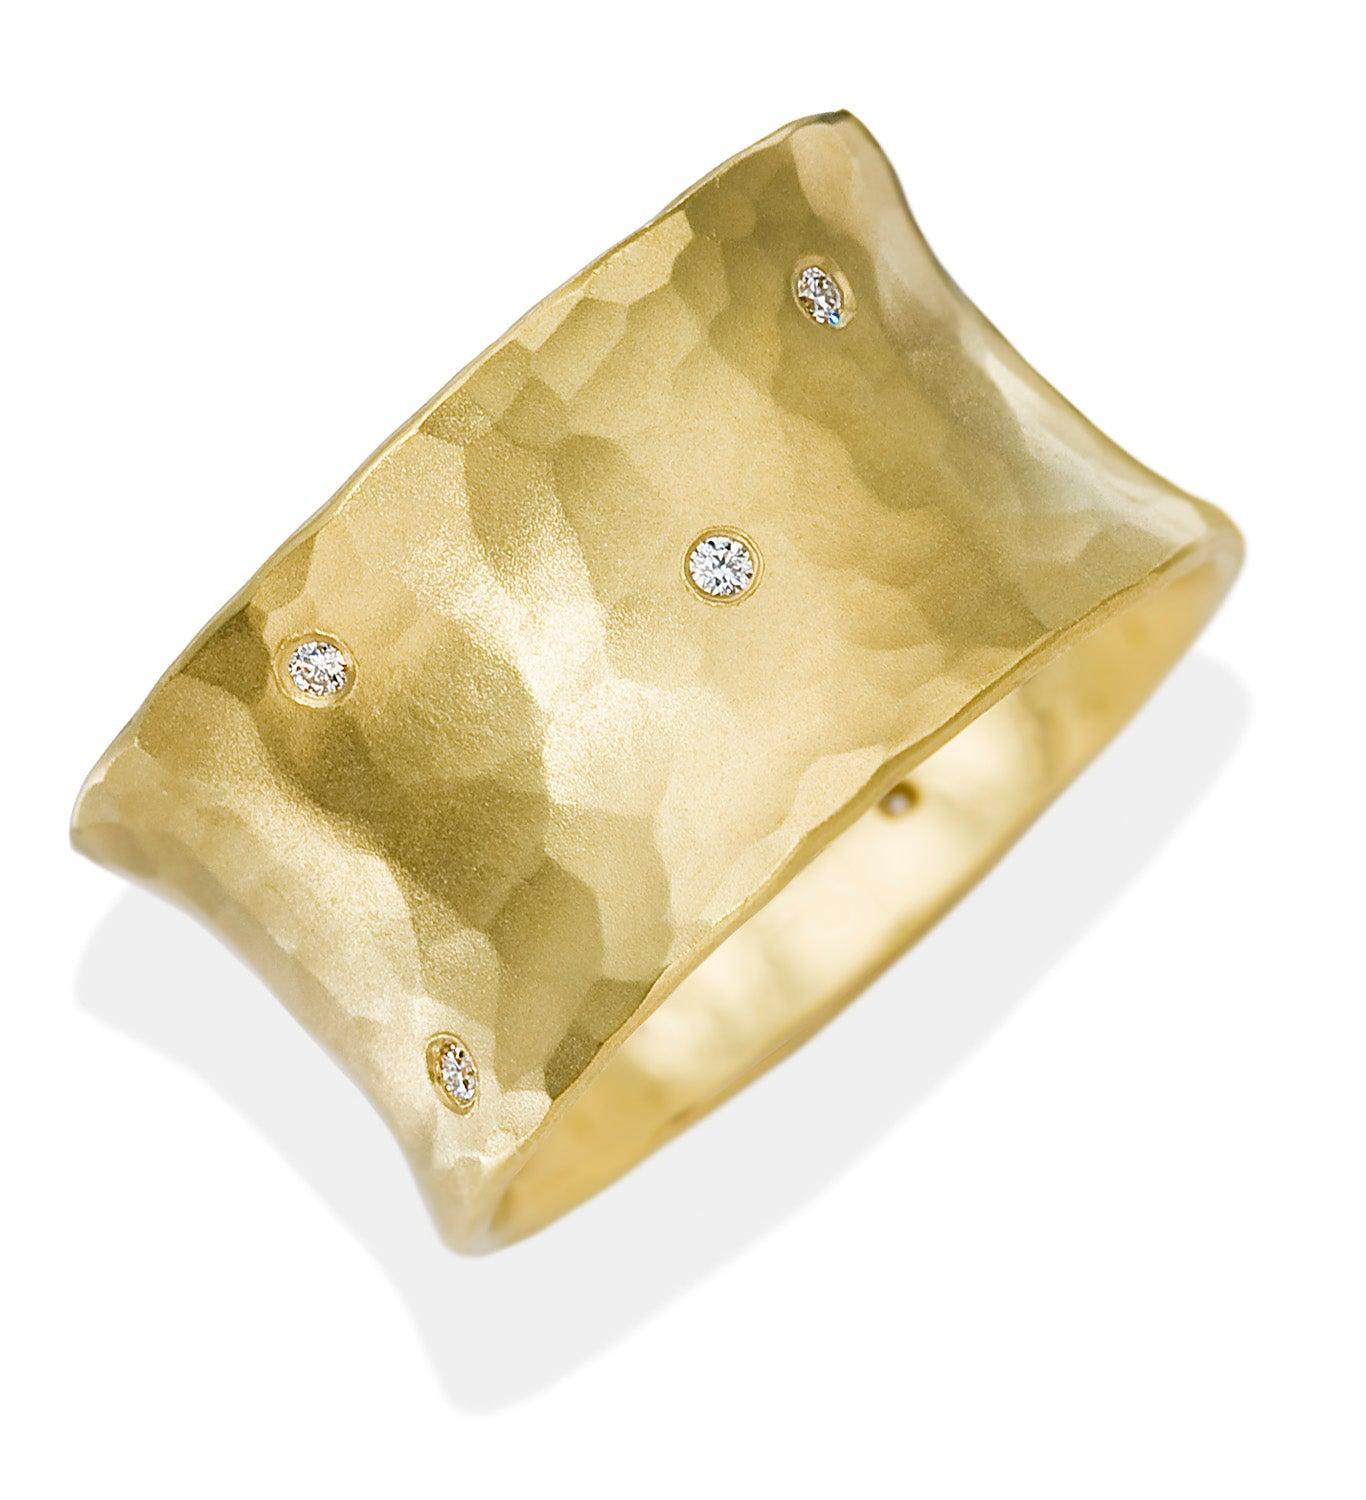 12mm 18K Gold Vale Ring with Diamonds-Jewelry-Toby Pomeroy-Sorrel Sky Gallery